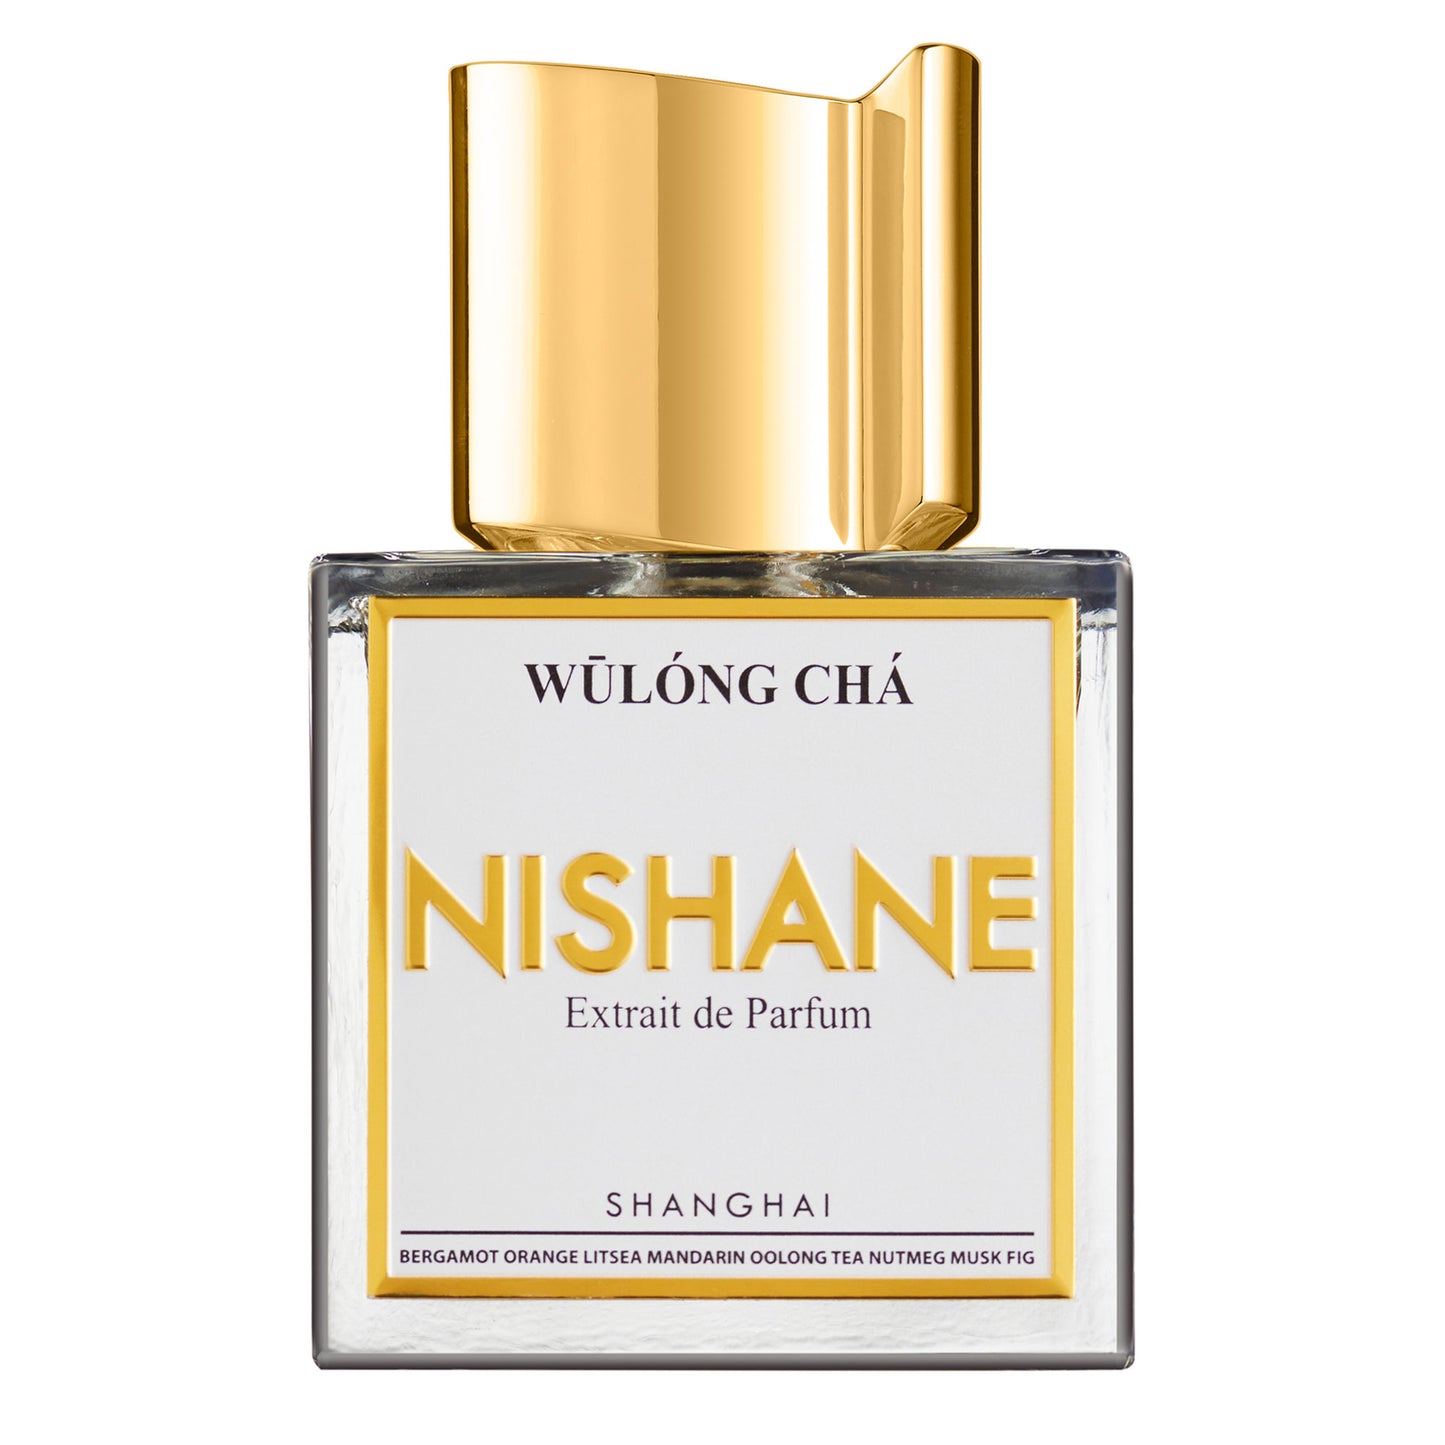 Wulong Cha Nishane Extrait de Parfum